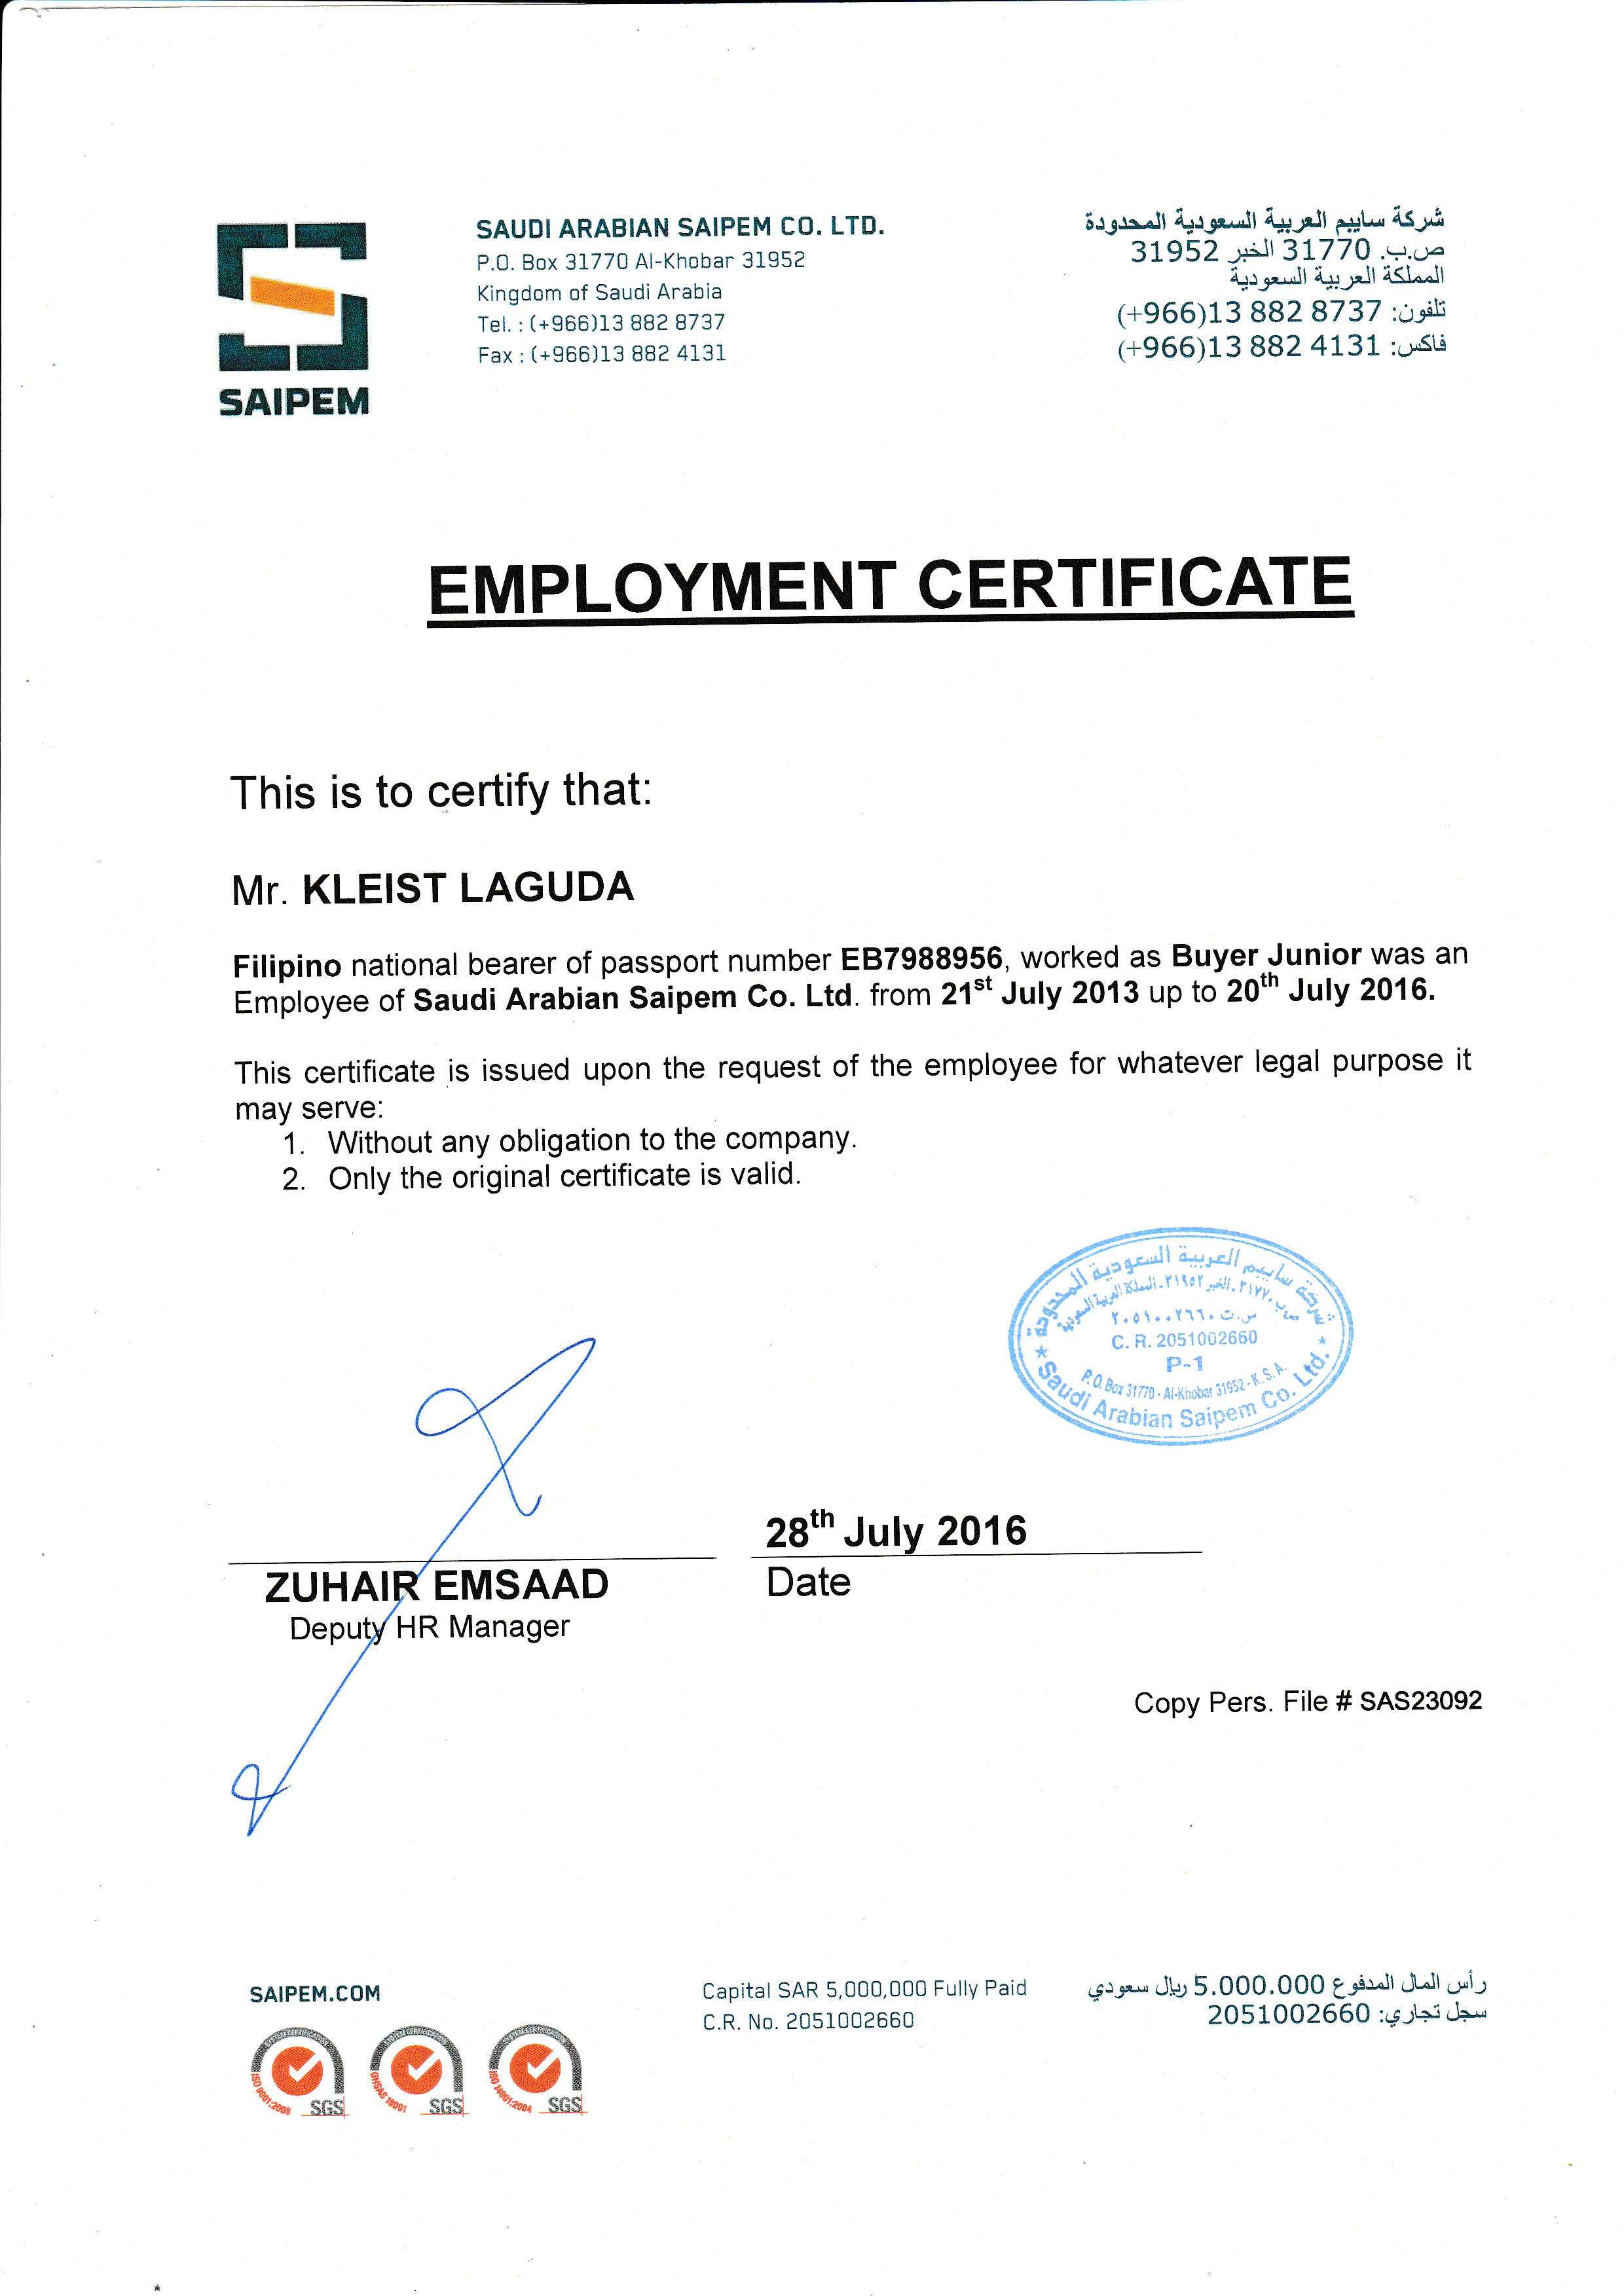 Certificate of Employment - Saudi Arabian Saipem